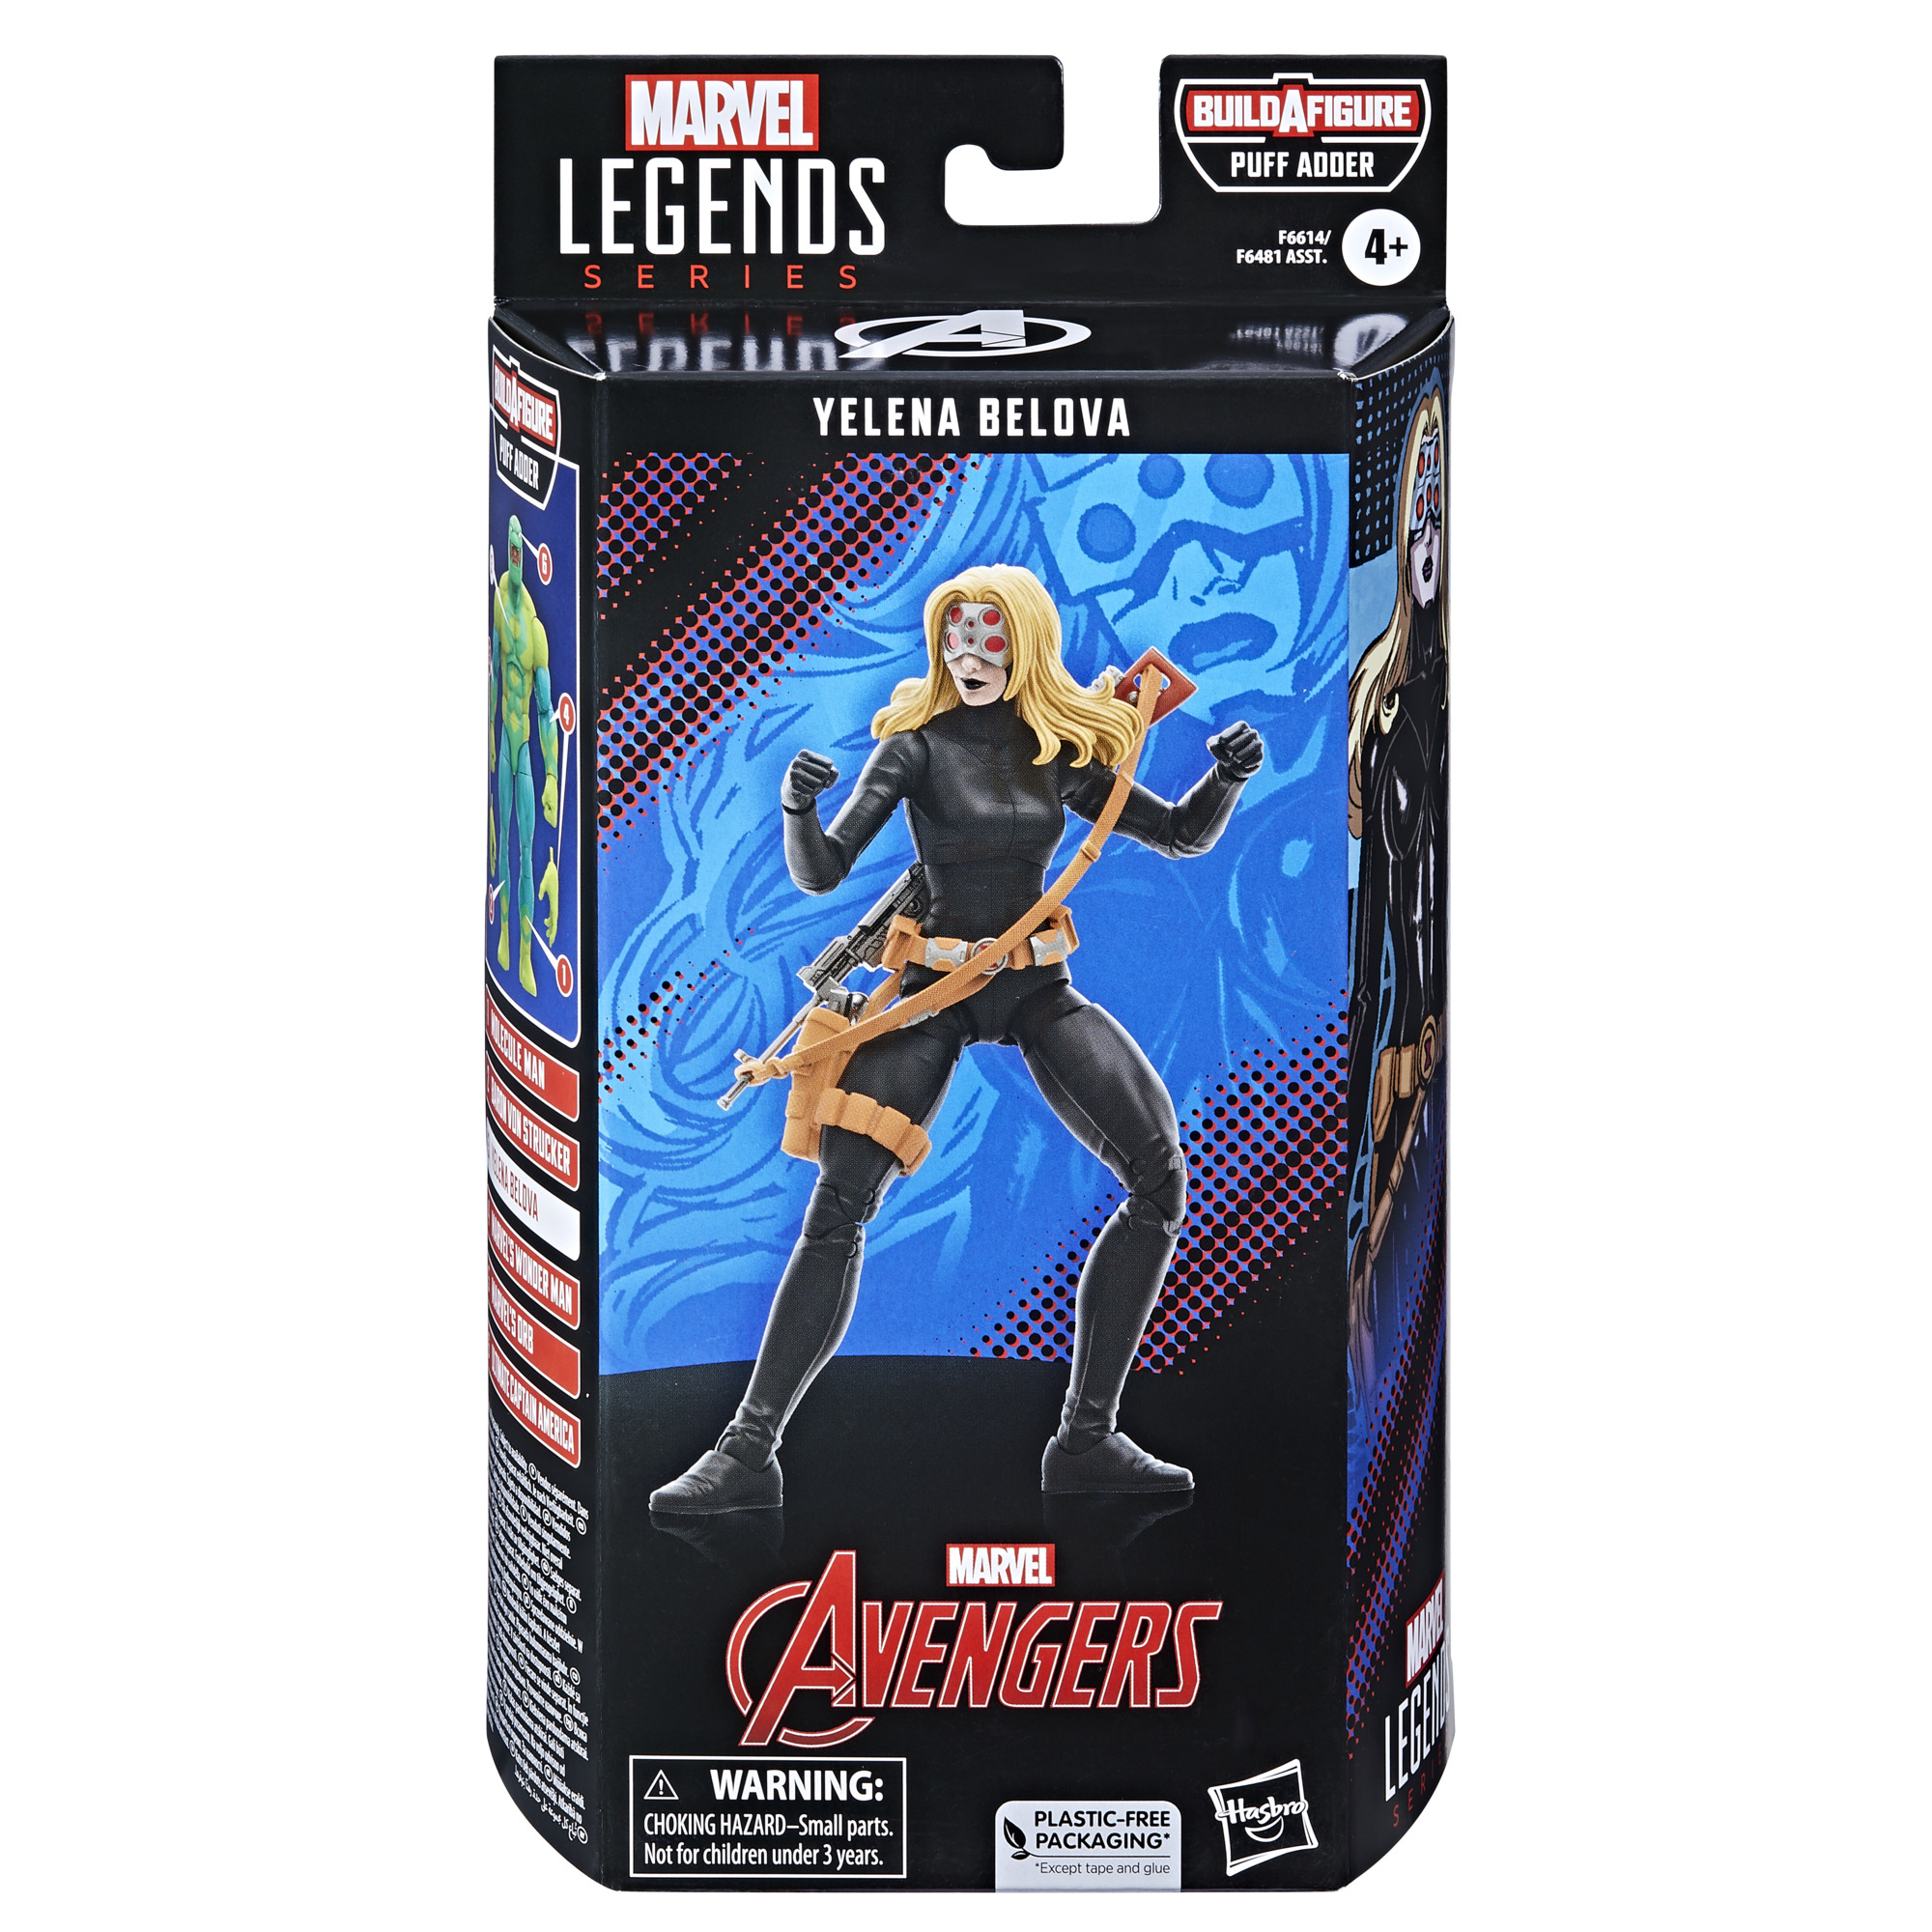 Marvel Legends - Avengers - Yelena Belova Black Widow 6iin Action Figure (BAF Puff Adder)